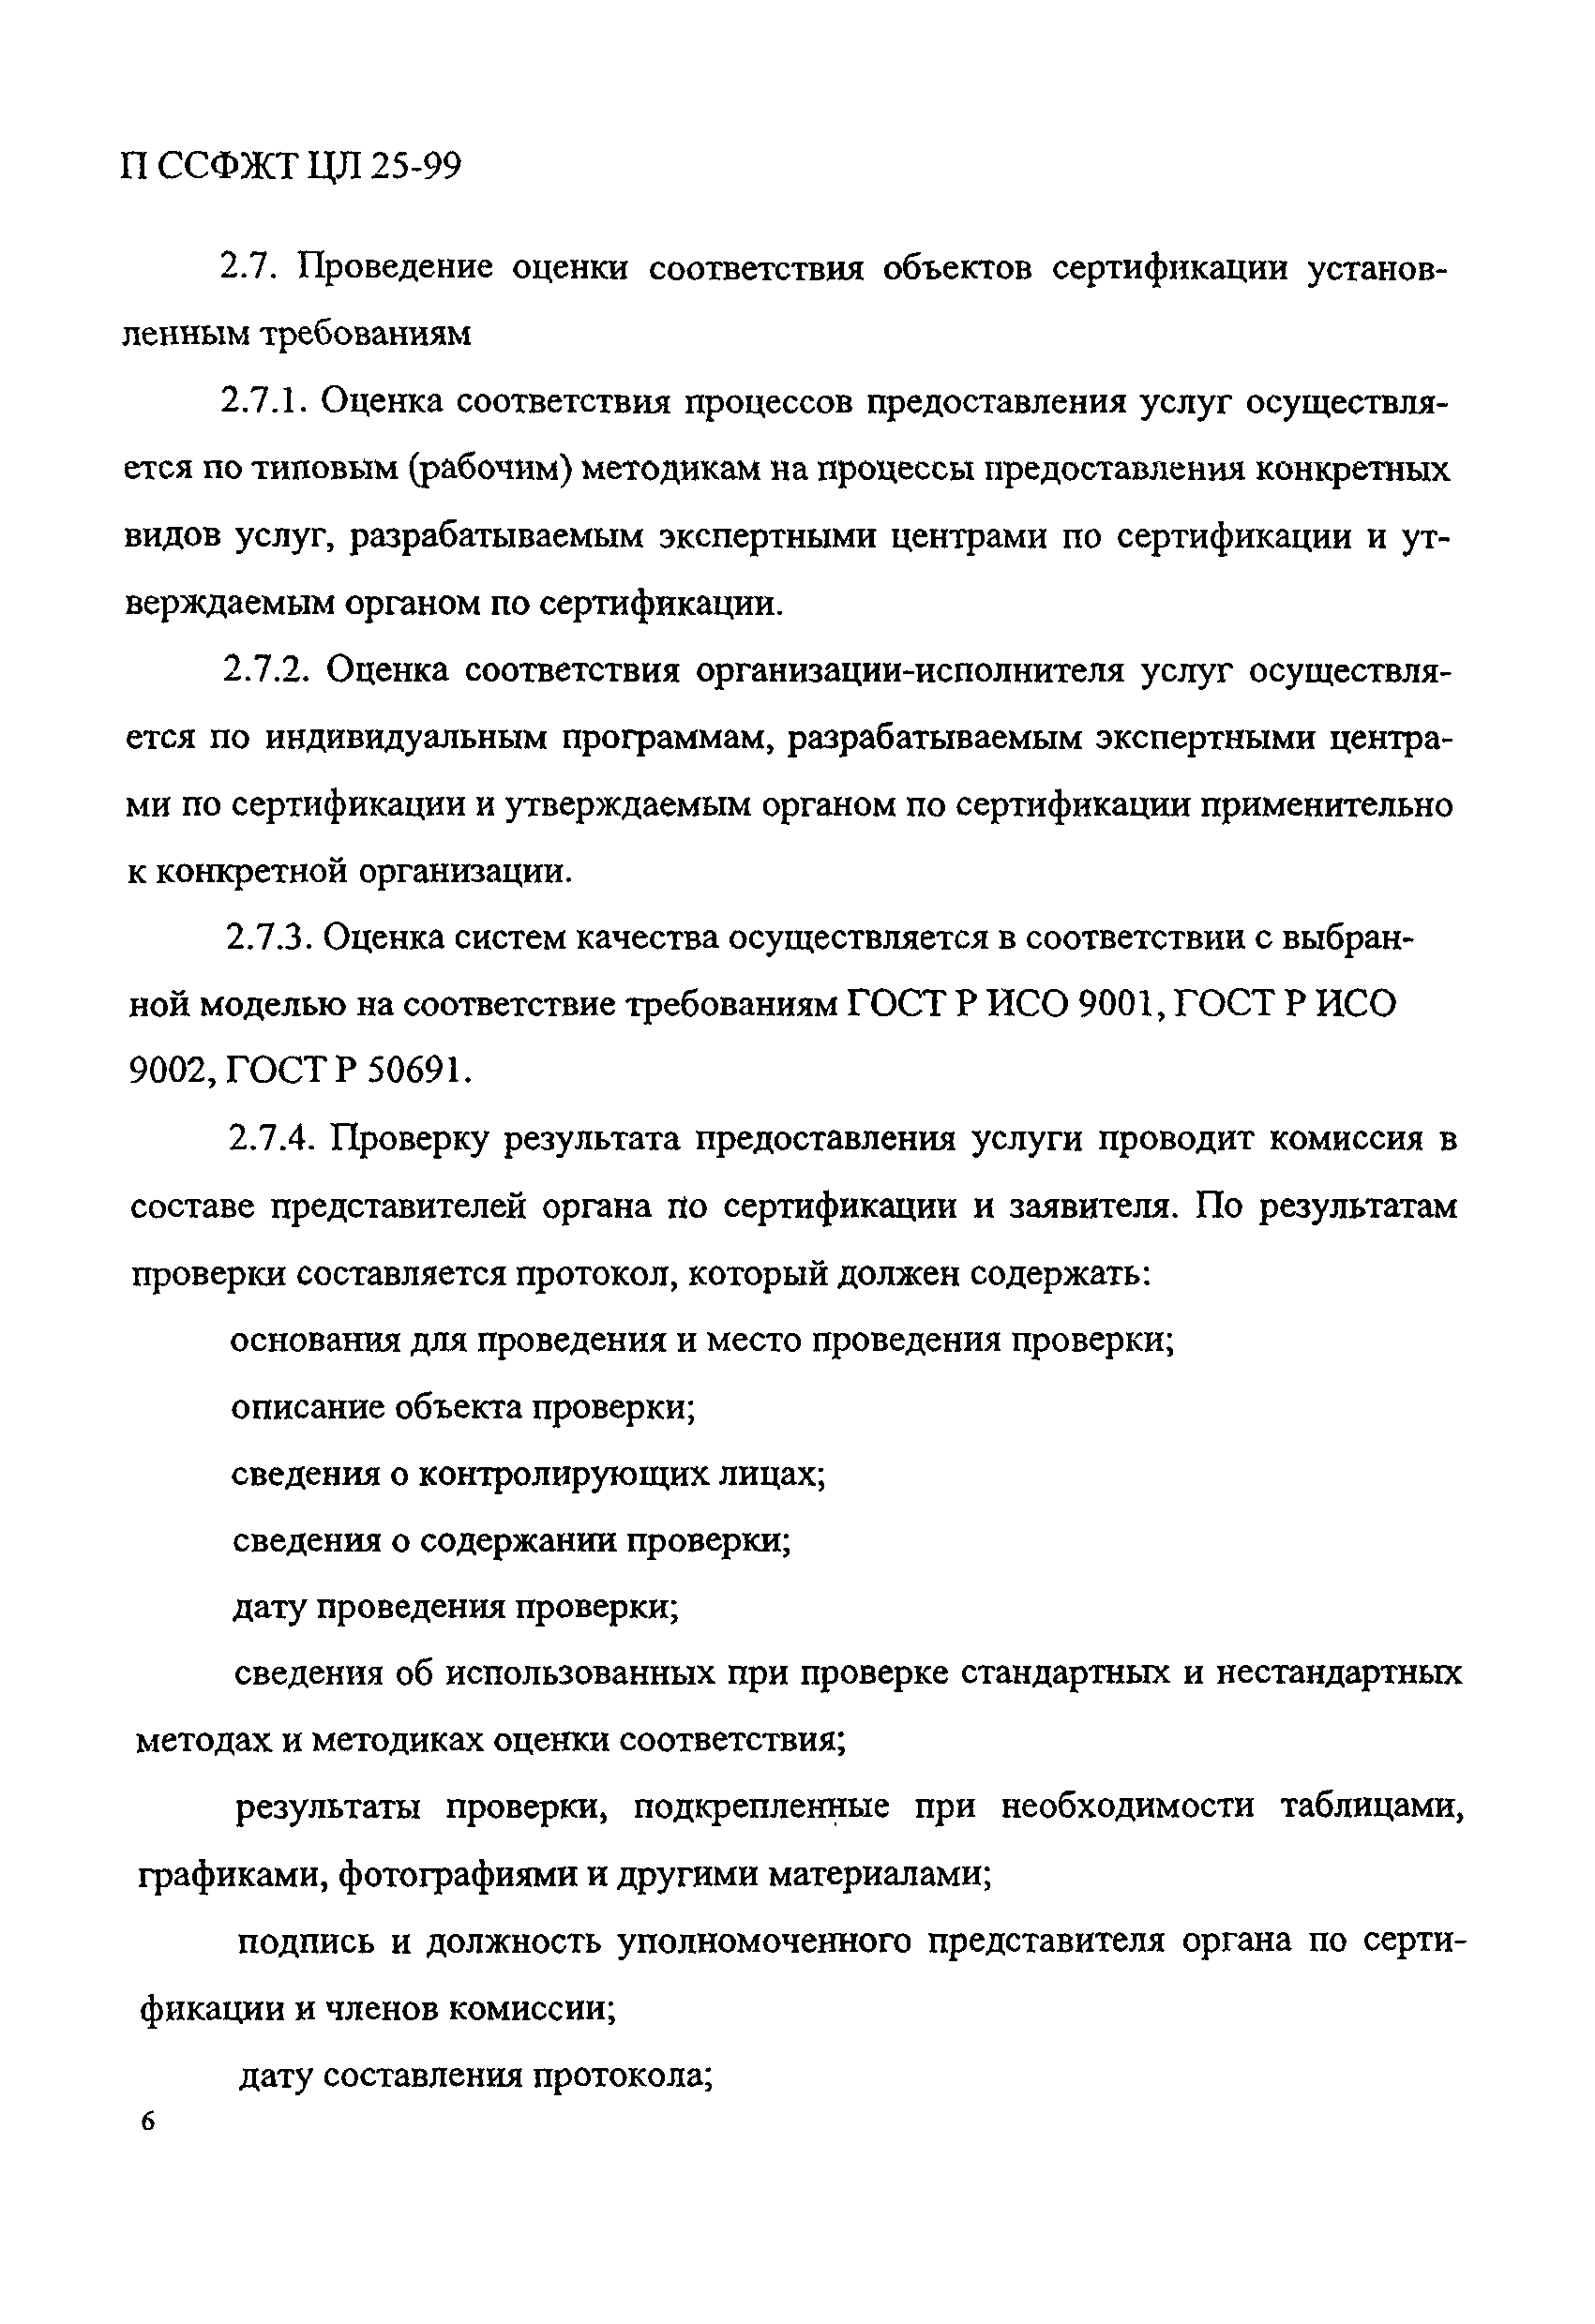 П ССФЖТ ЦЛ 25-99